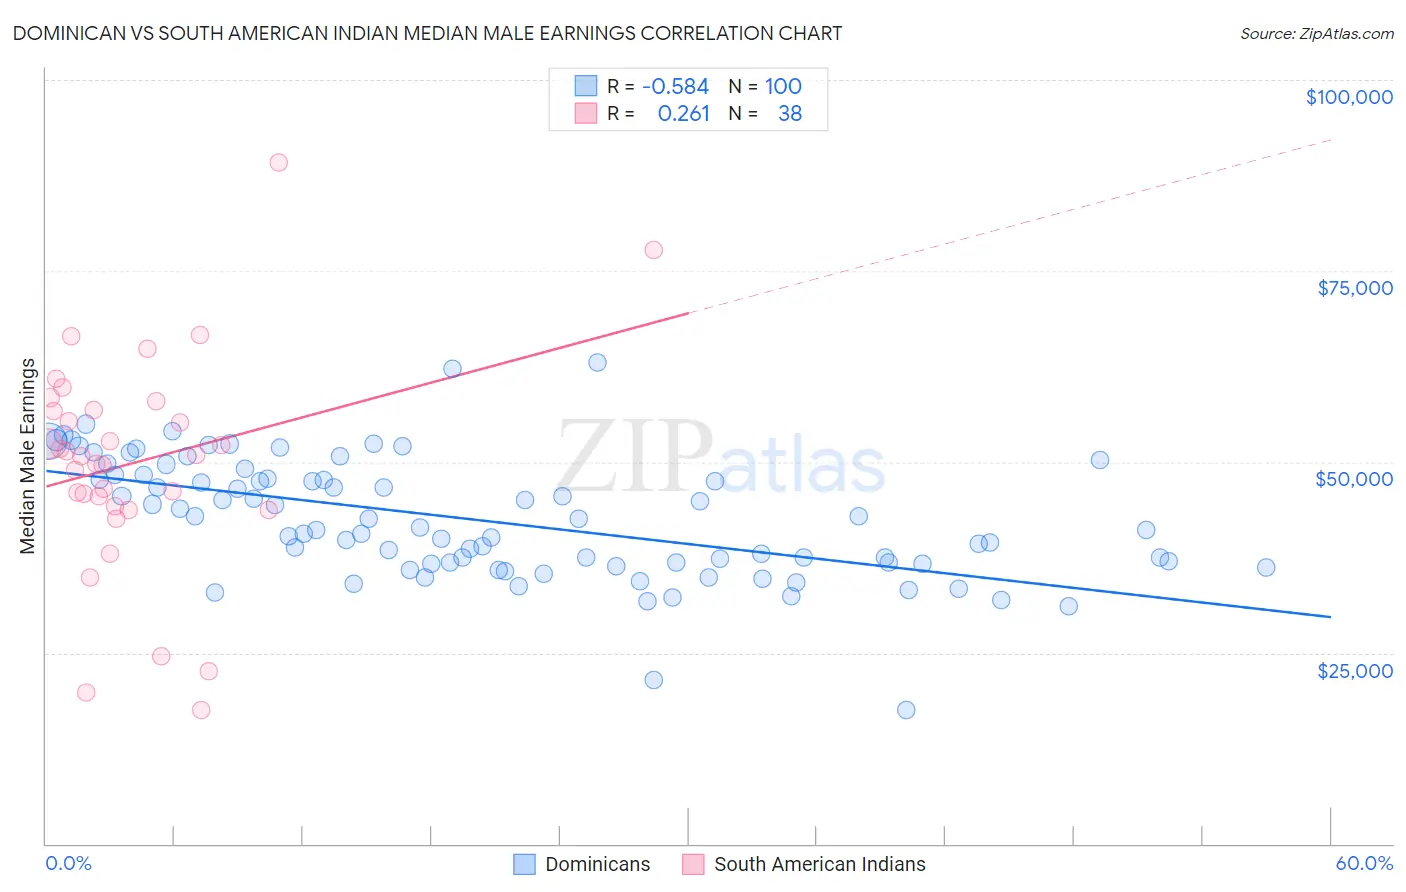 Dominican vs South American Indian Median Male Earnings